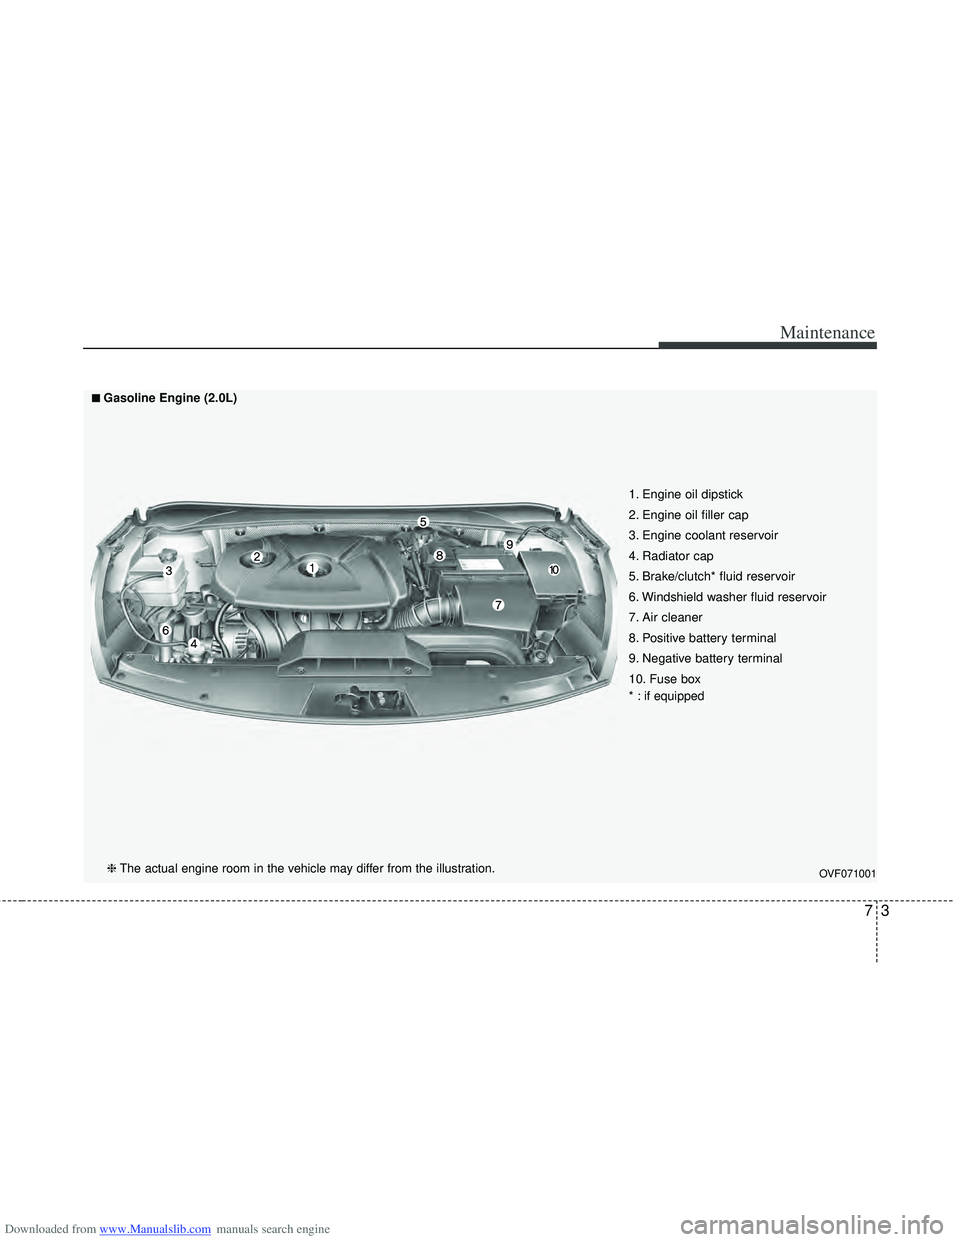 HYUNDAI I40 2015  Owners Manual Downloaded from www.Manualslib.com manuals search engine 73
Maintenance
OVF071001
1. Engine oil dipstick
2. Engine oil filler cap
3. Engine coolant reservoir
4. Radiator cap
5. Brake/clutch* fluid res